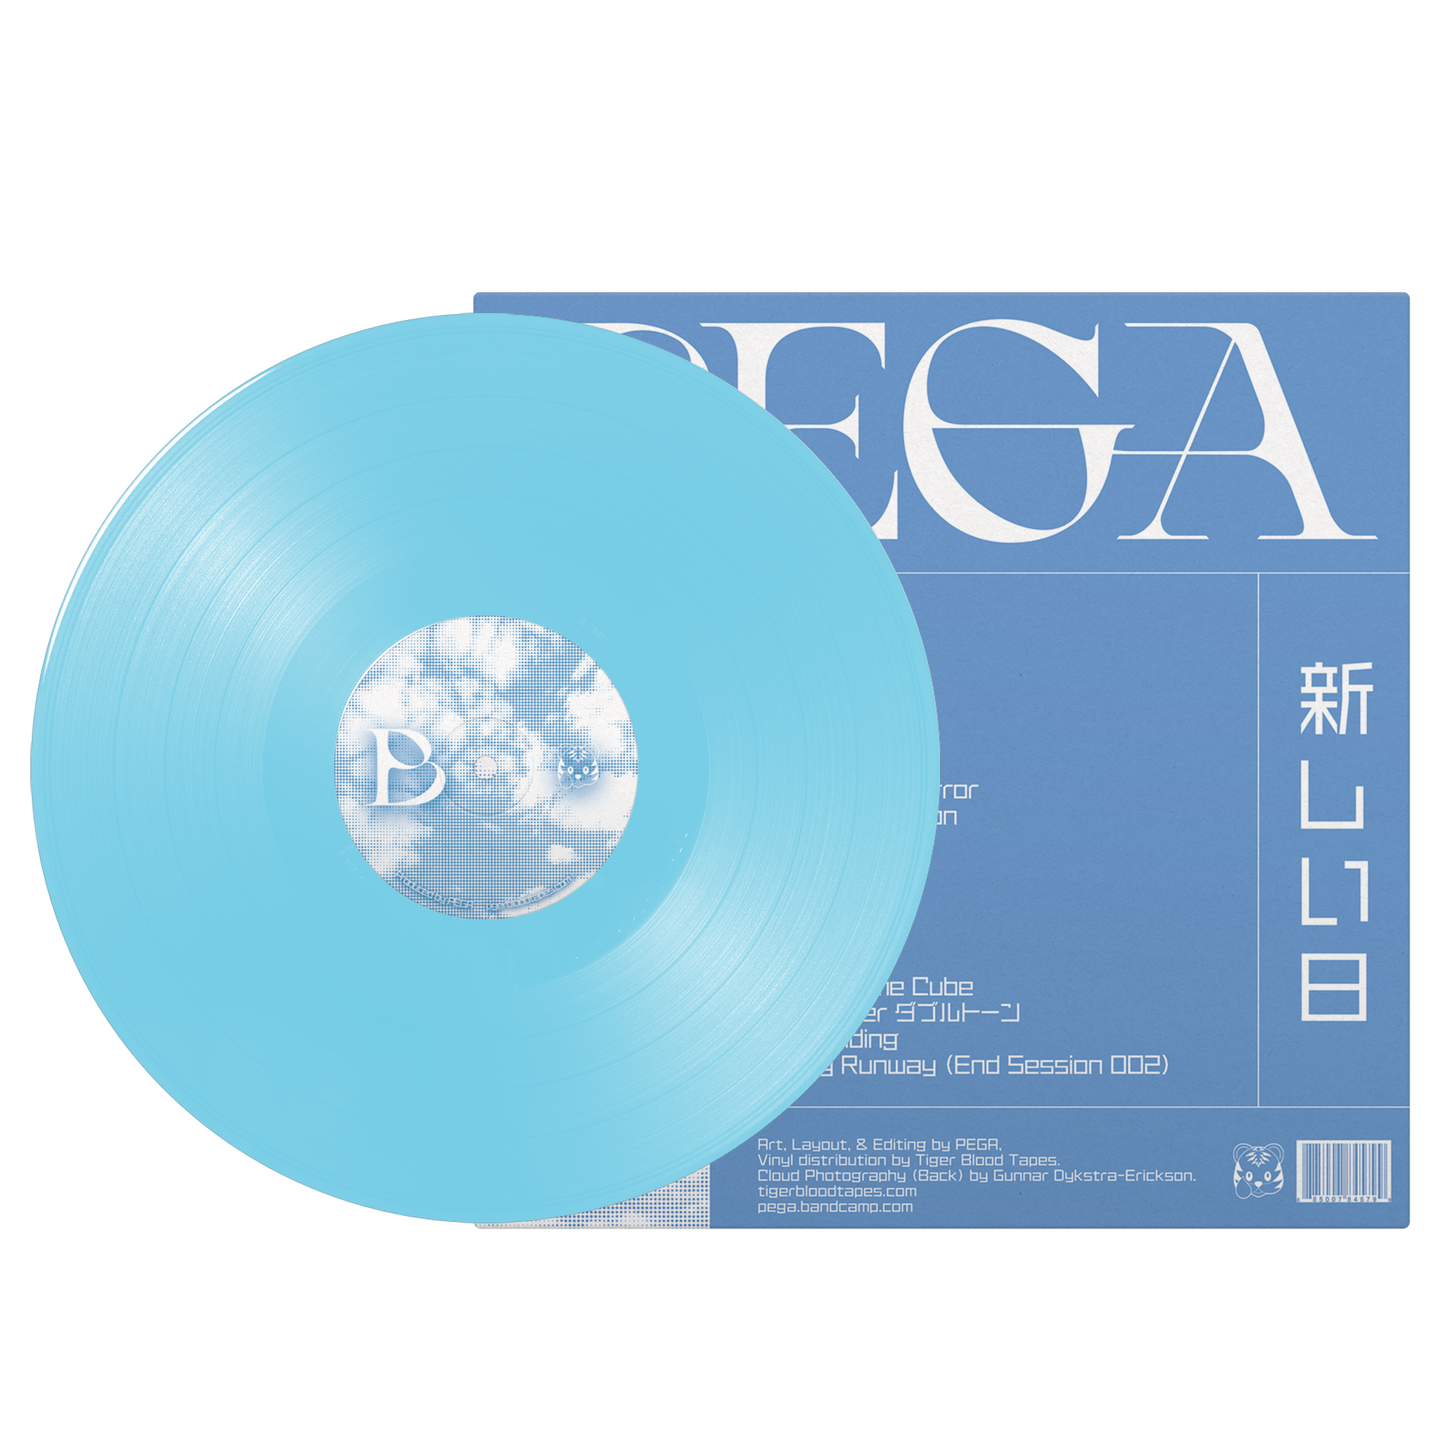 PEGA - "新しい日" Limited Edition Sky Blue 12" LP